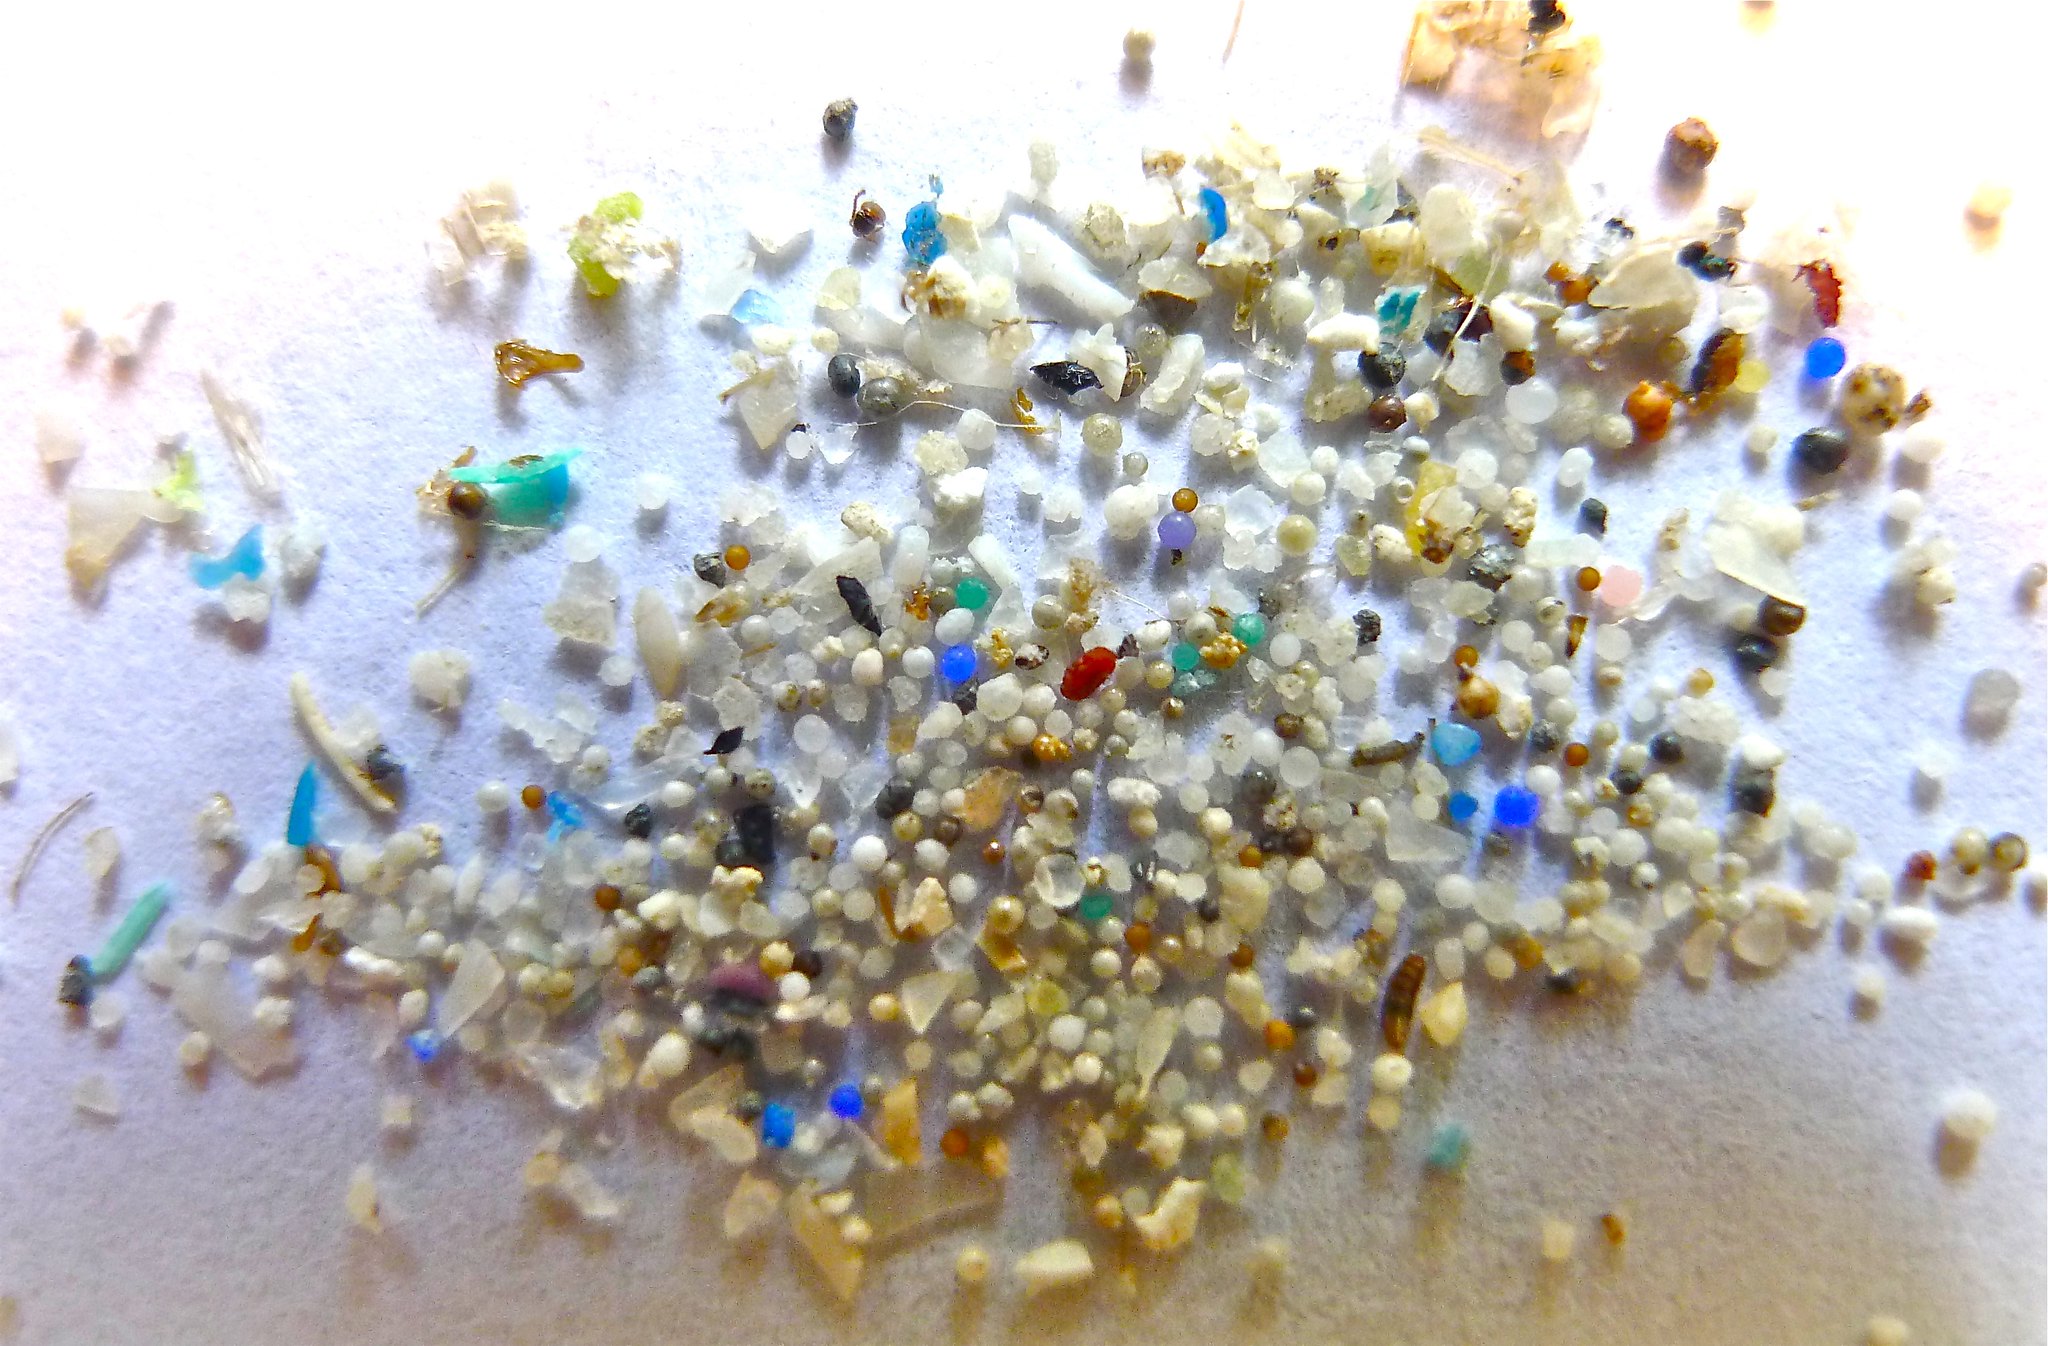 Microplastics on Auckland beaches – Expert Reaction